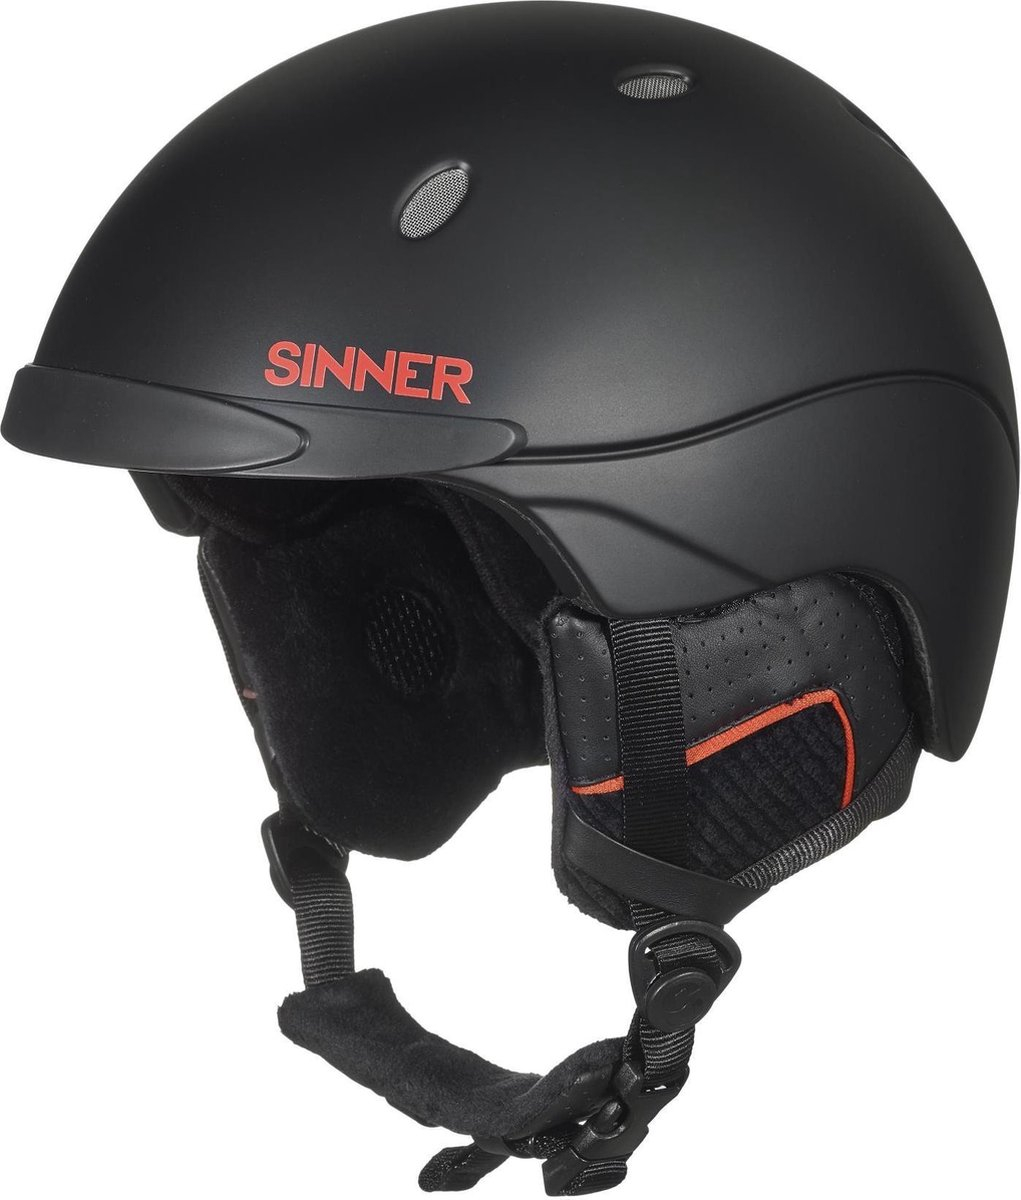 Supplement Vertrouwelijk opschorten Sinner Titan 52 / 55 / 59 / 63 ski helm zwart van snowboard helmen